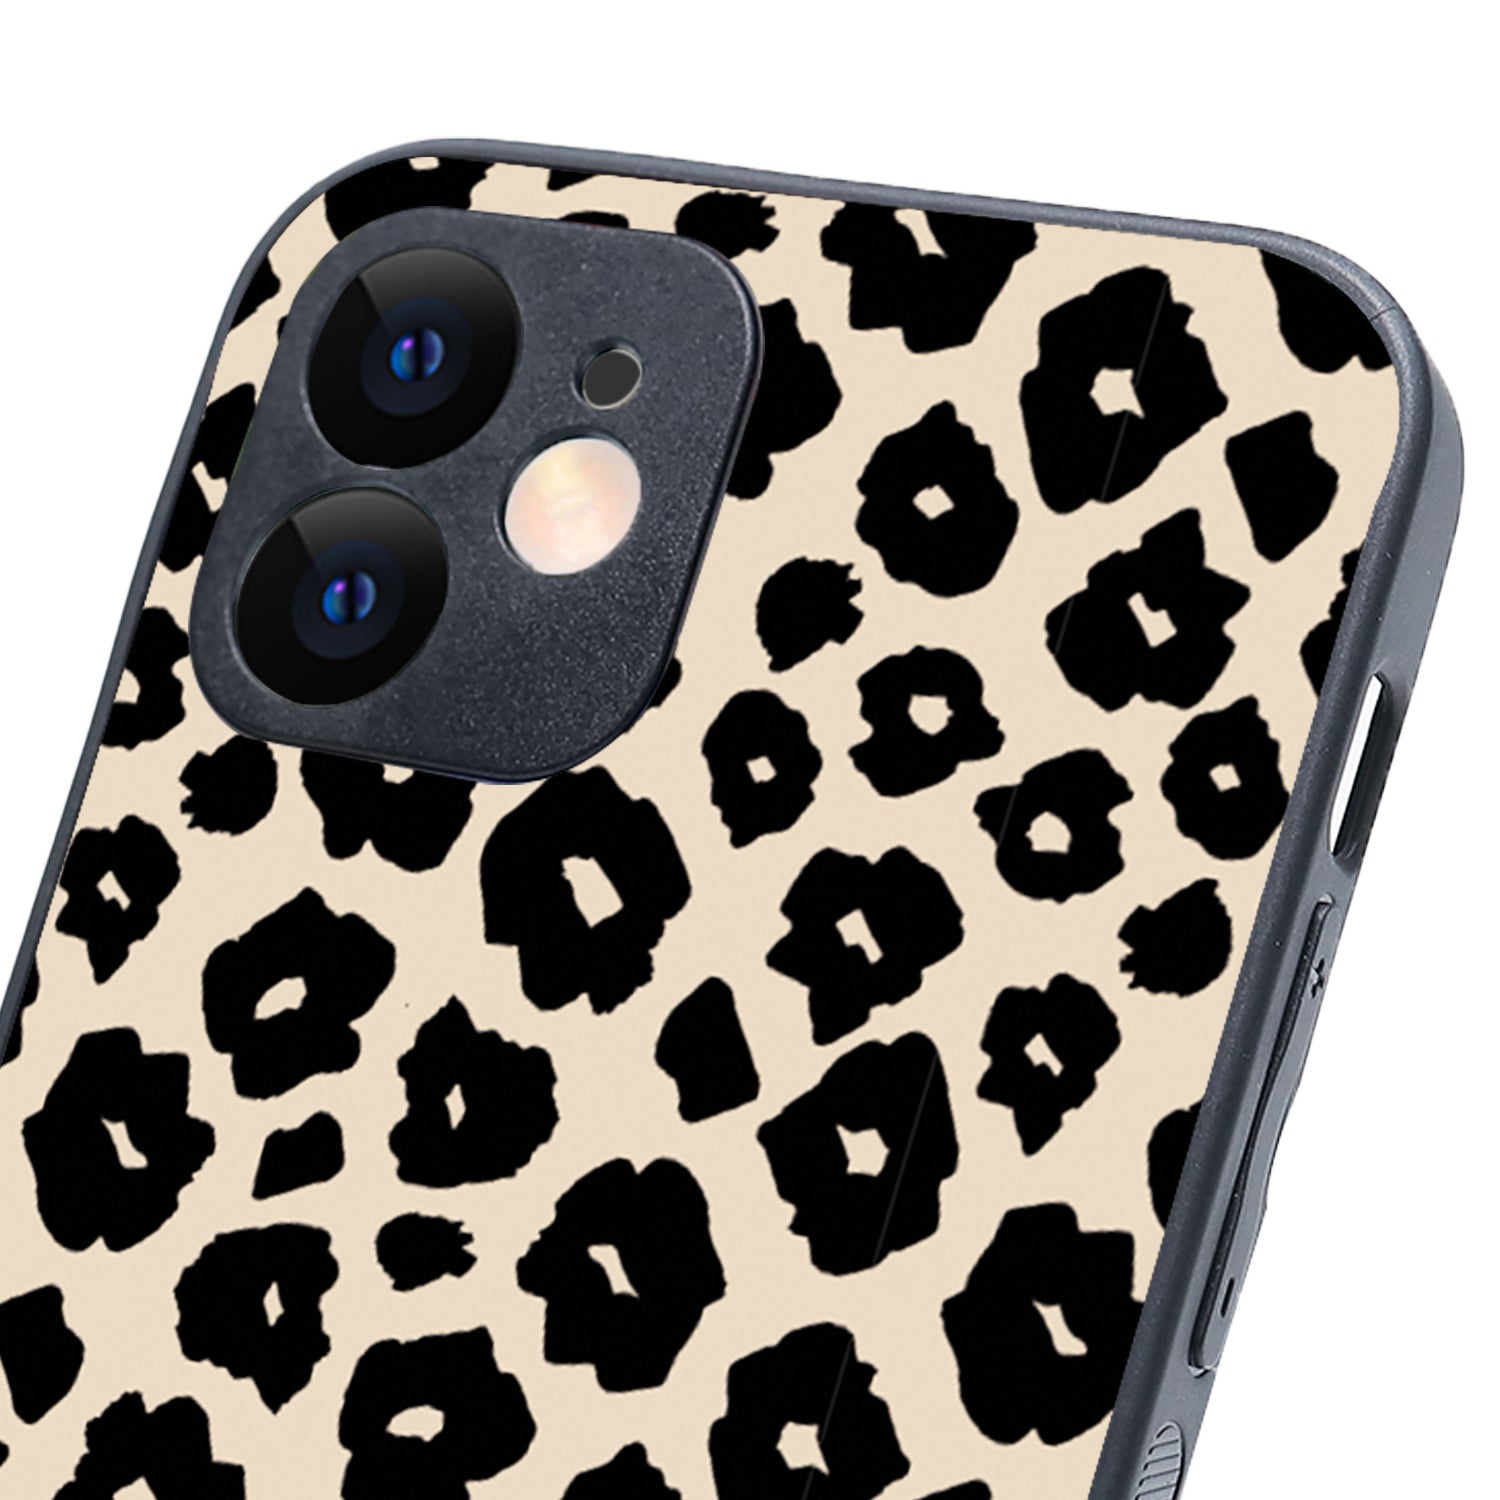 Leopard Animal Print iPhone 12 Case